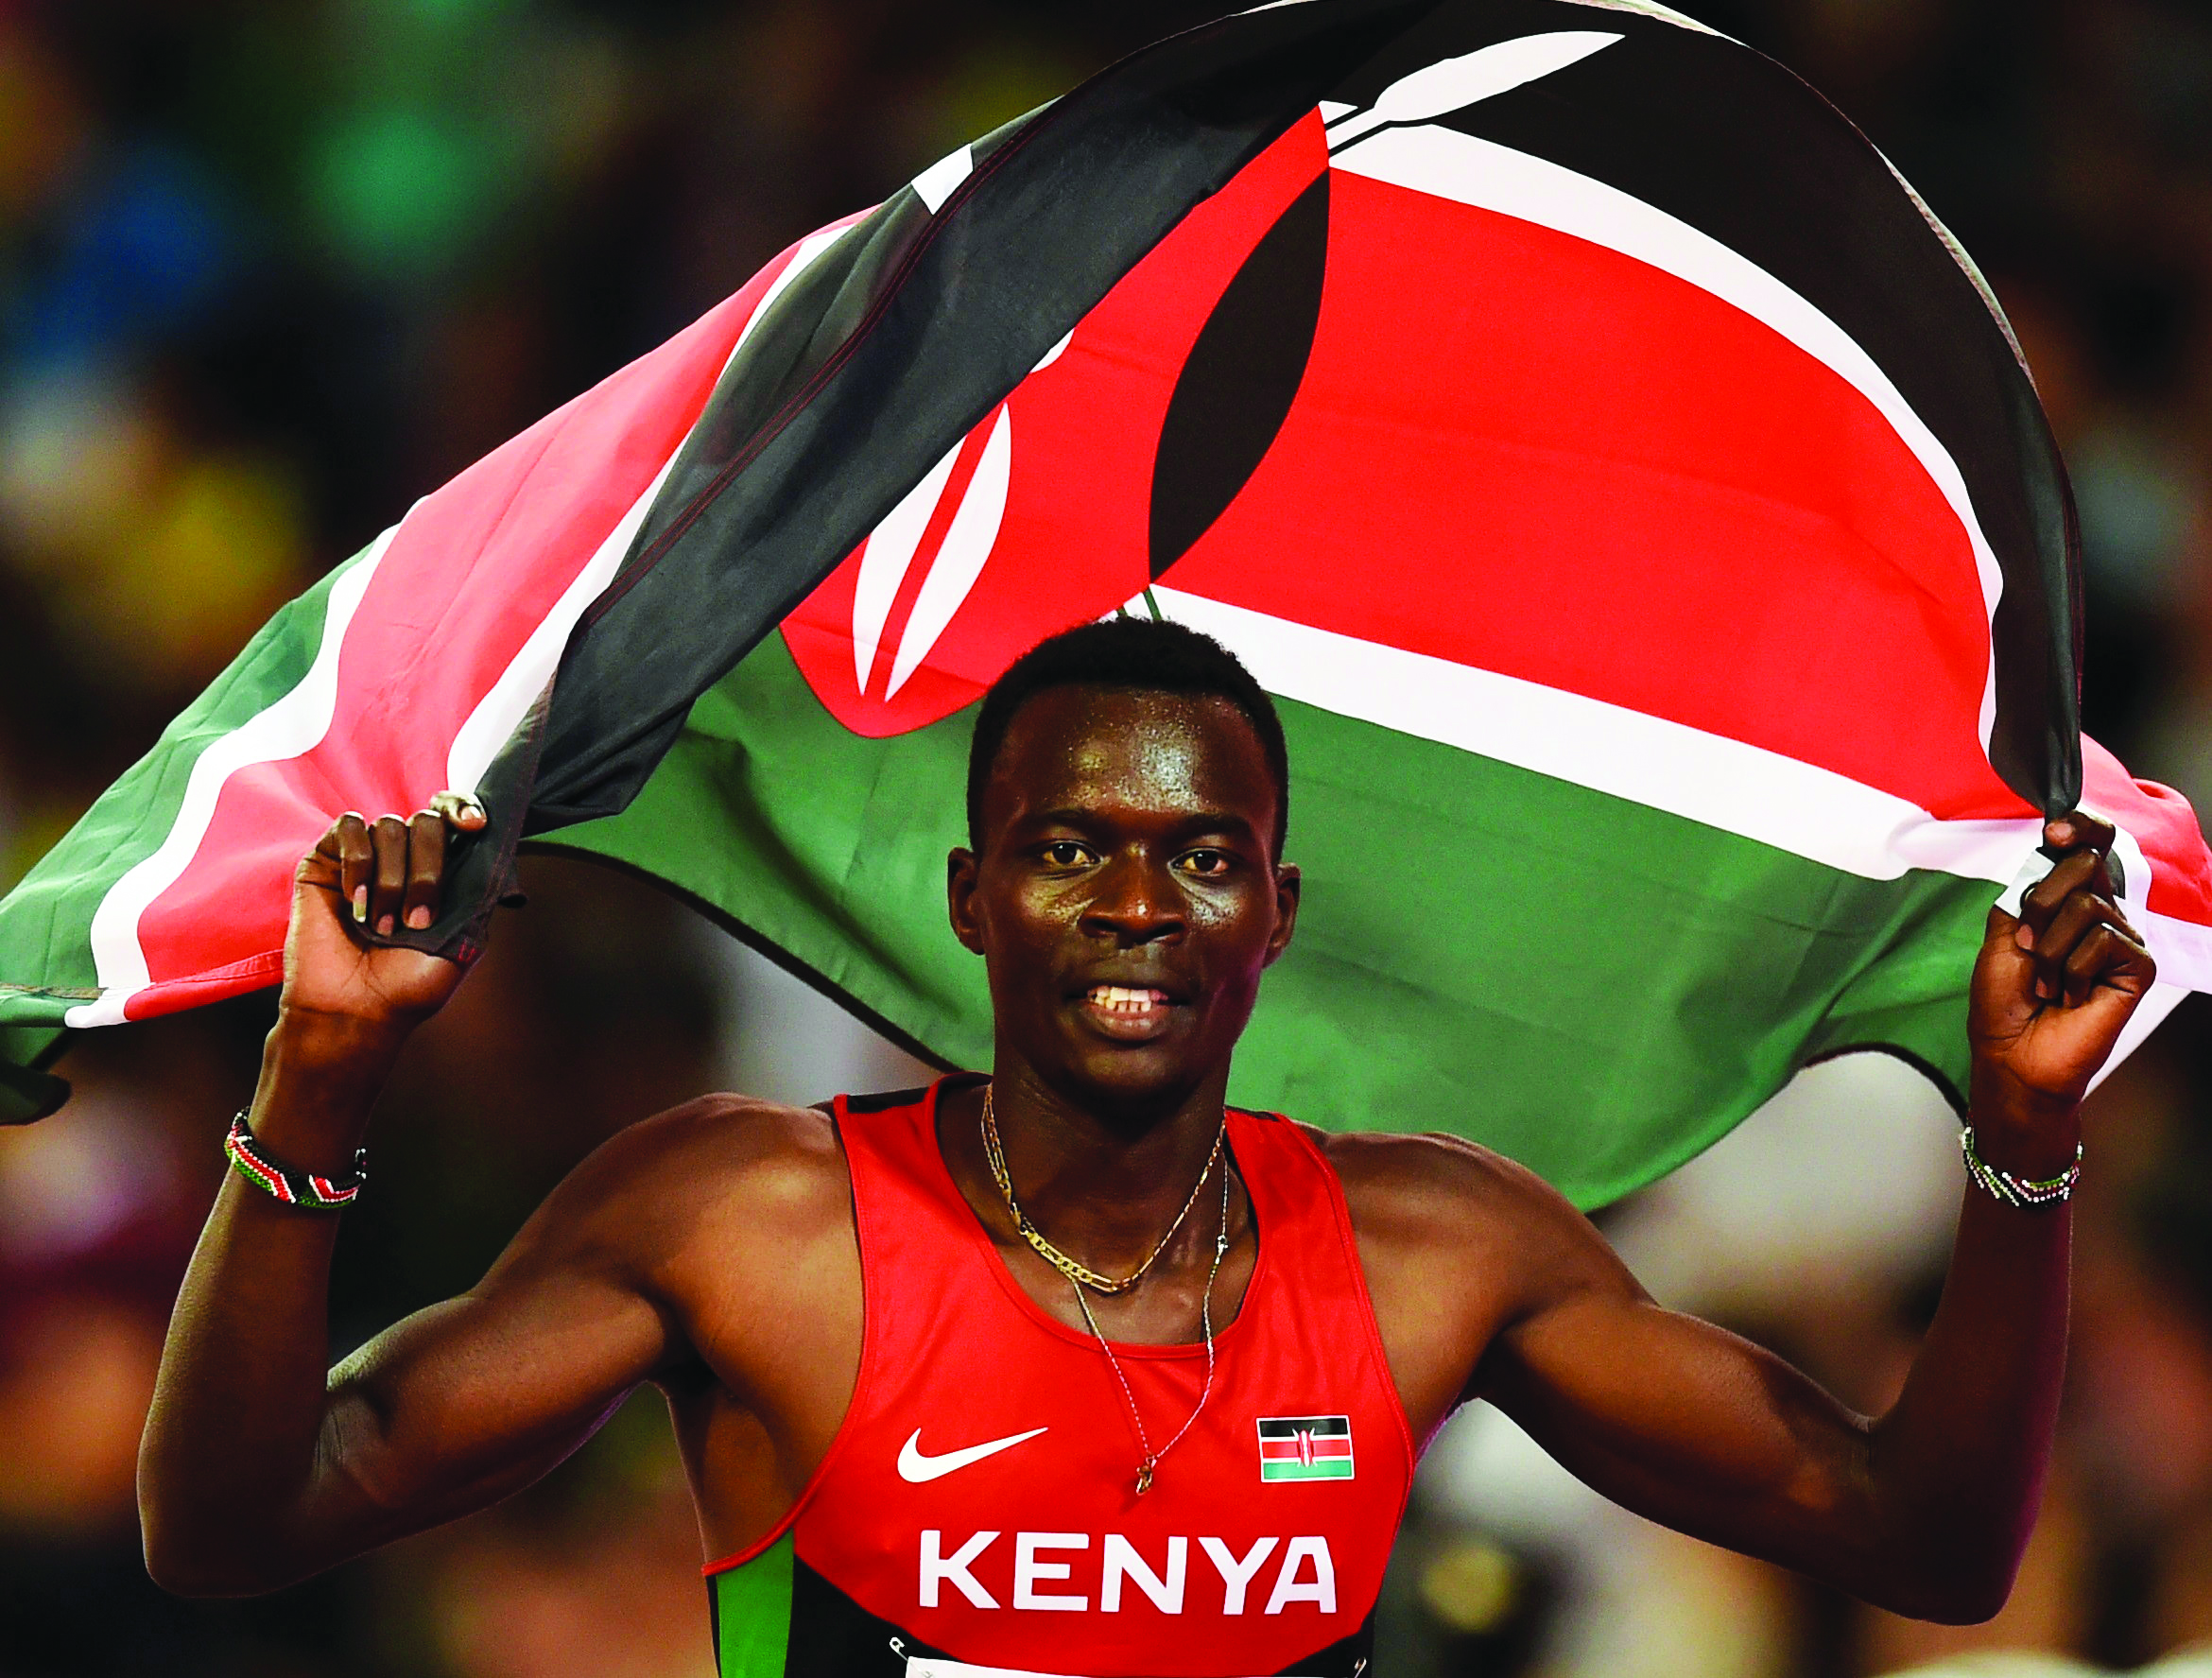 Athletics: Kenya's former world champion Bett dies in road accident